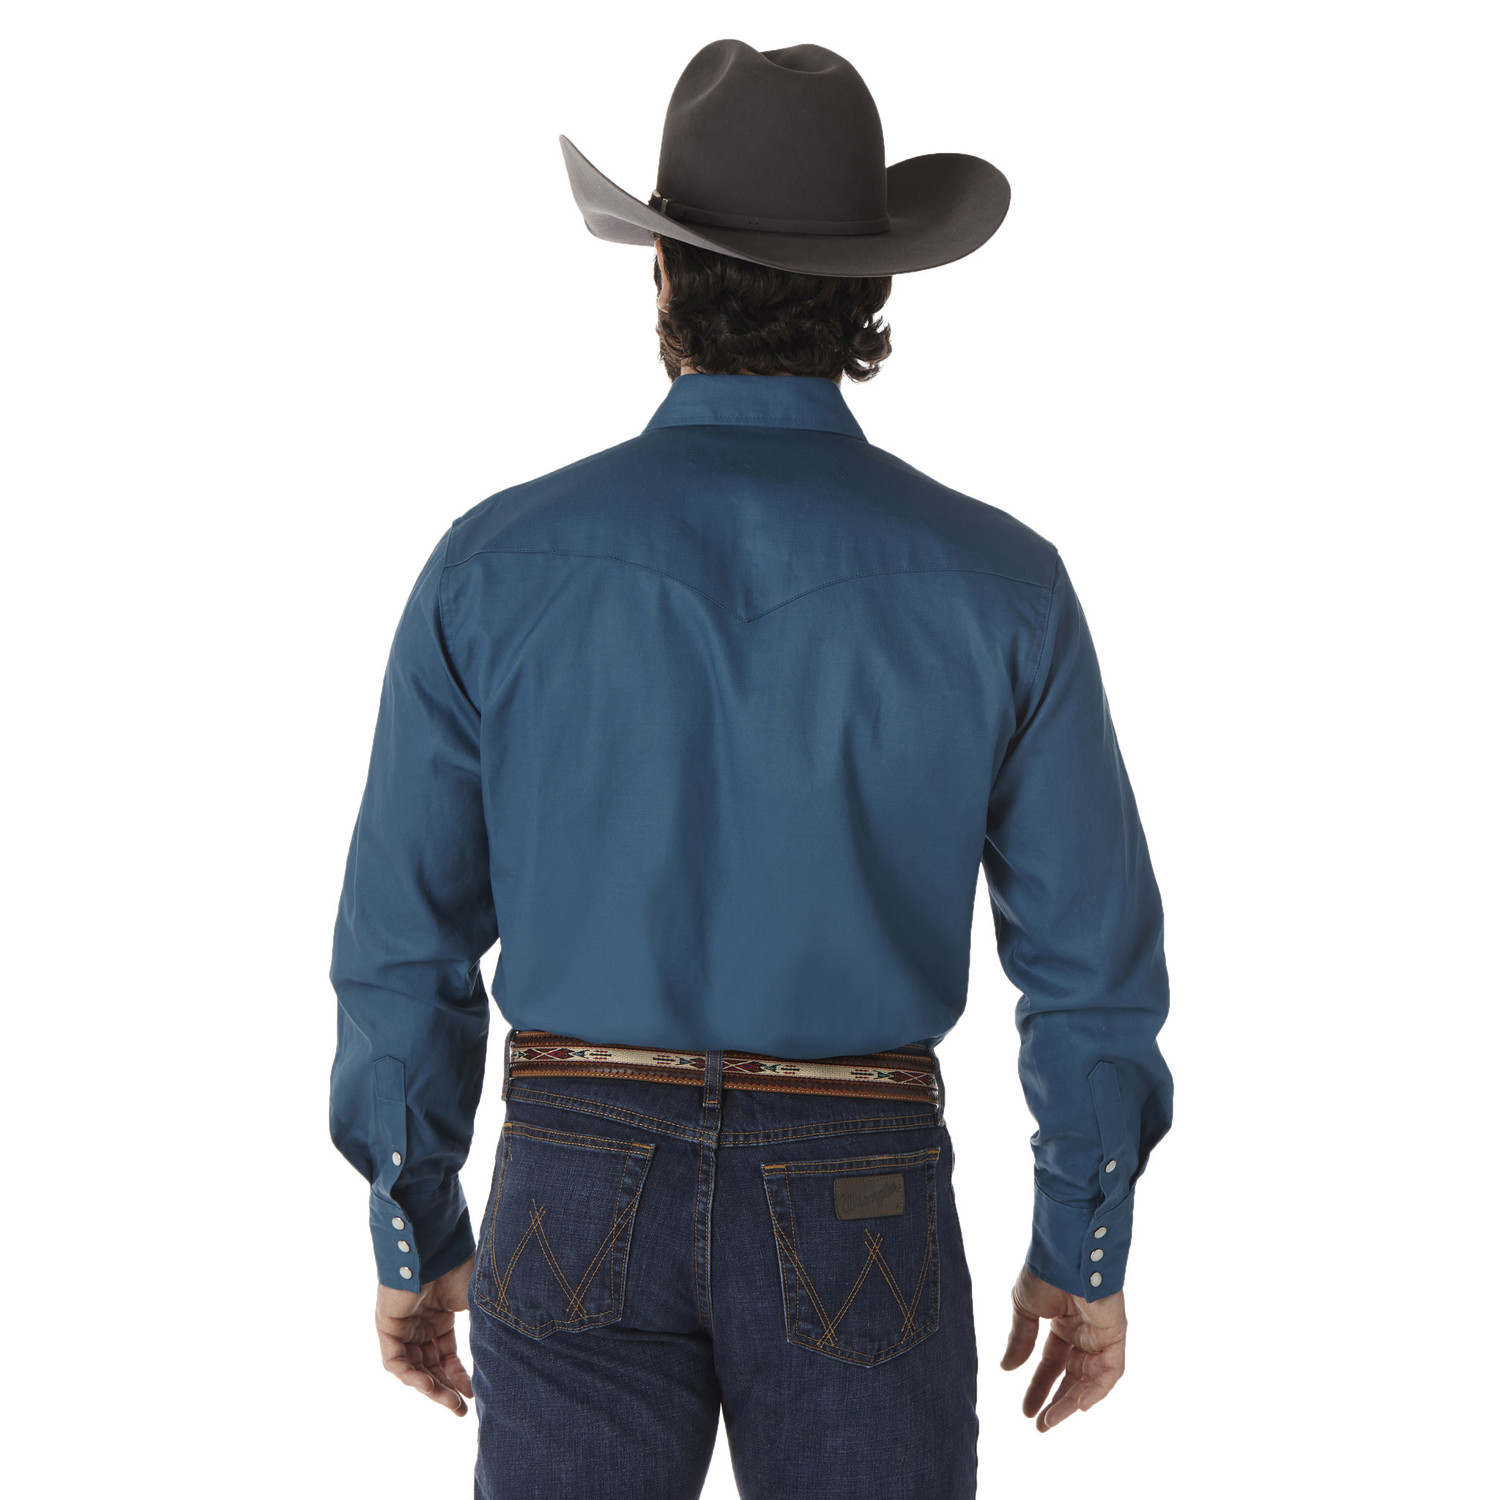 Cowboy Cut Twill Work Shirt Dark Teal - Frontier Western Shop